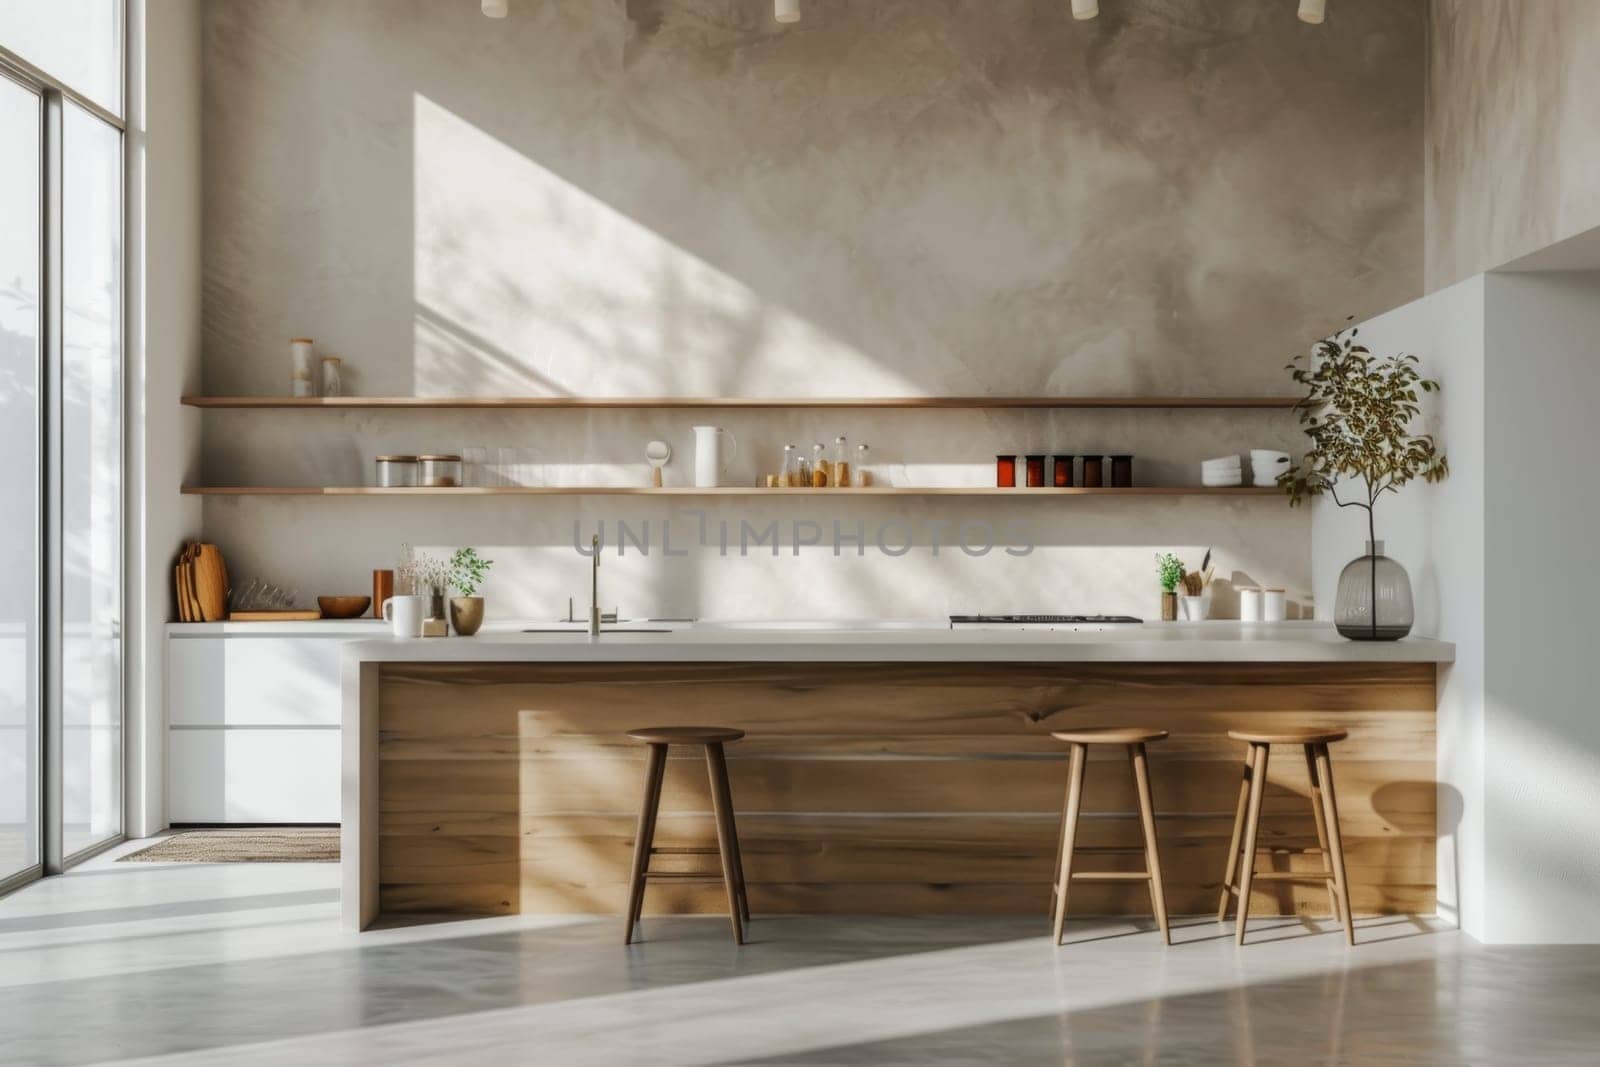 Architecture kitchen interior design Interior photography by Lobachad